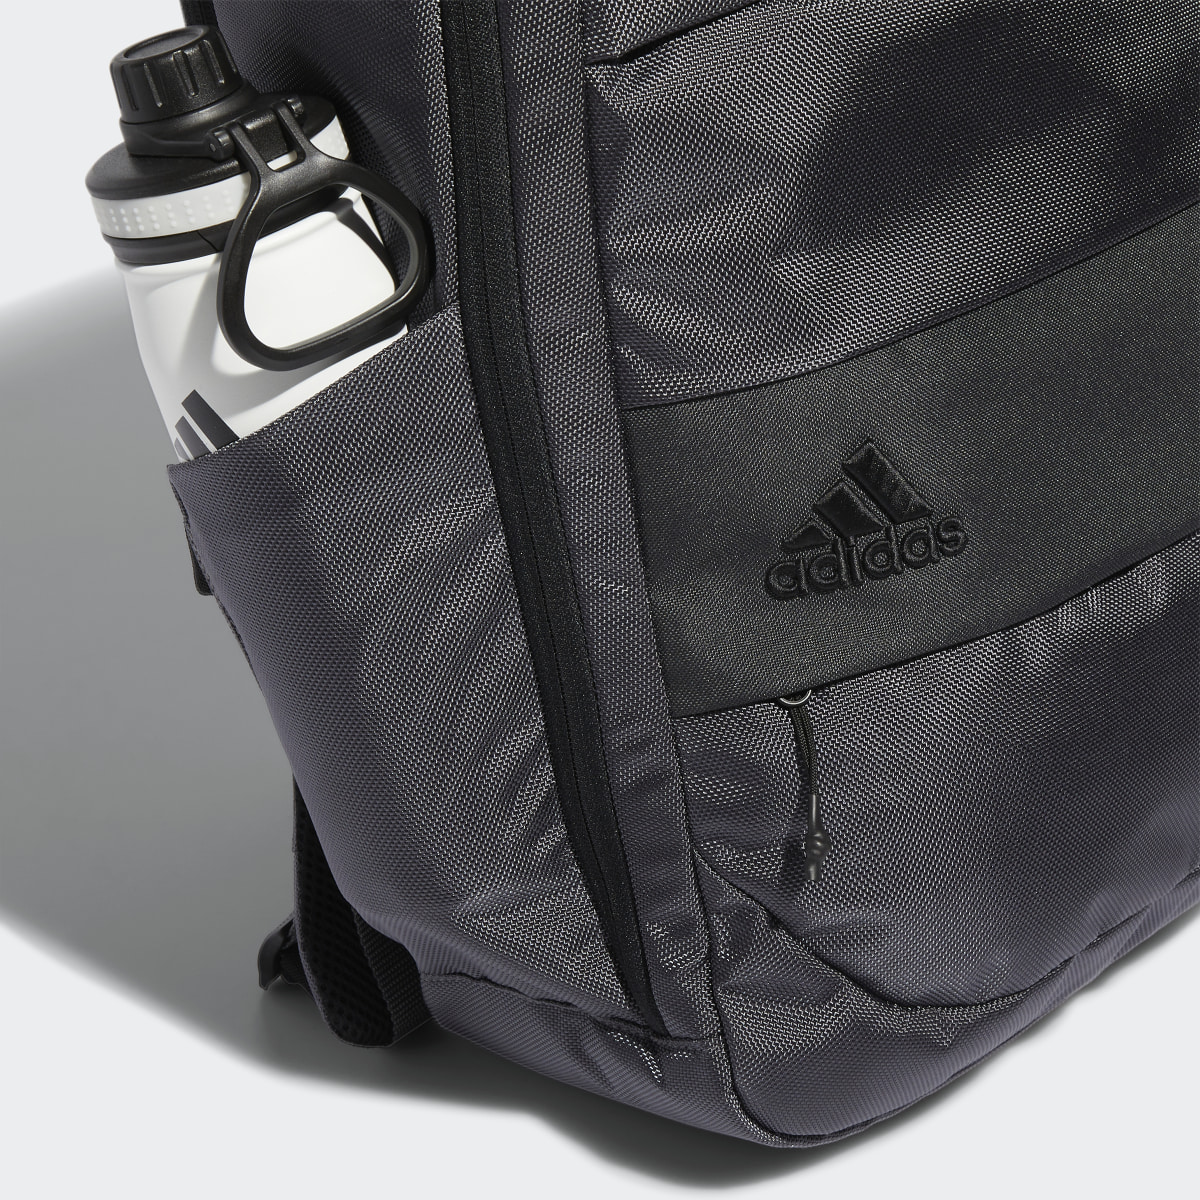 Adidas Golf Premium Backpack. 6